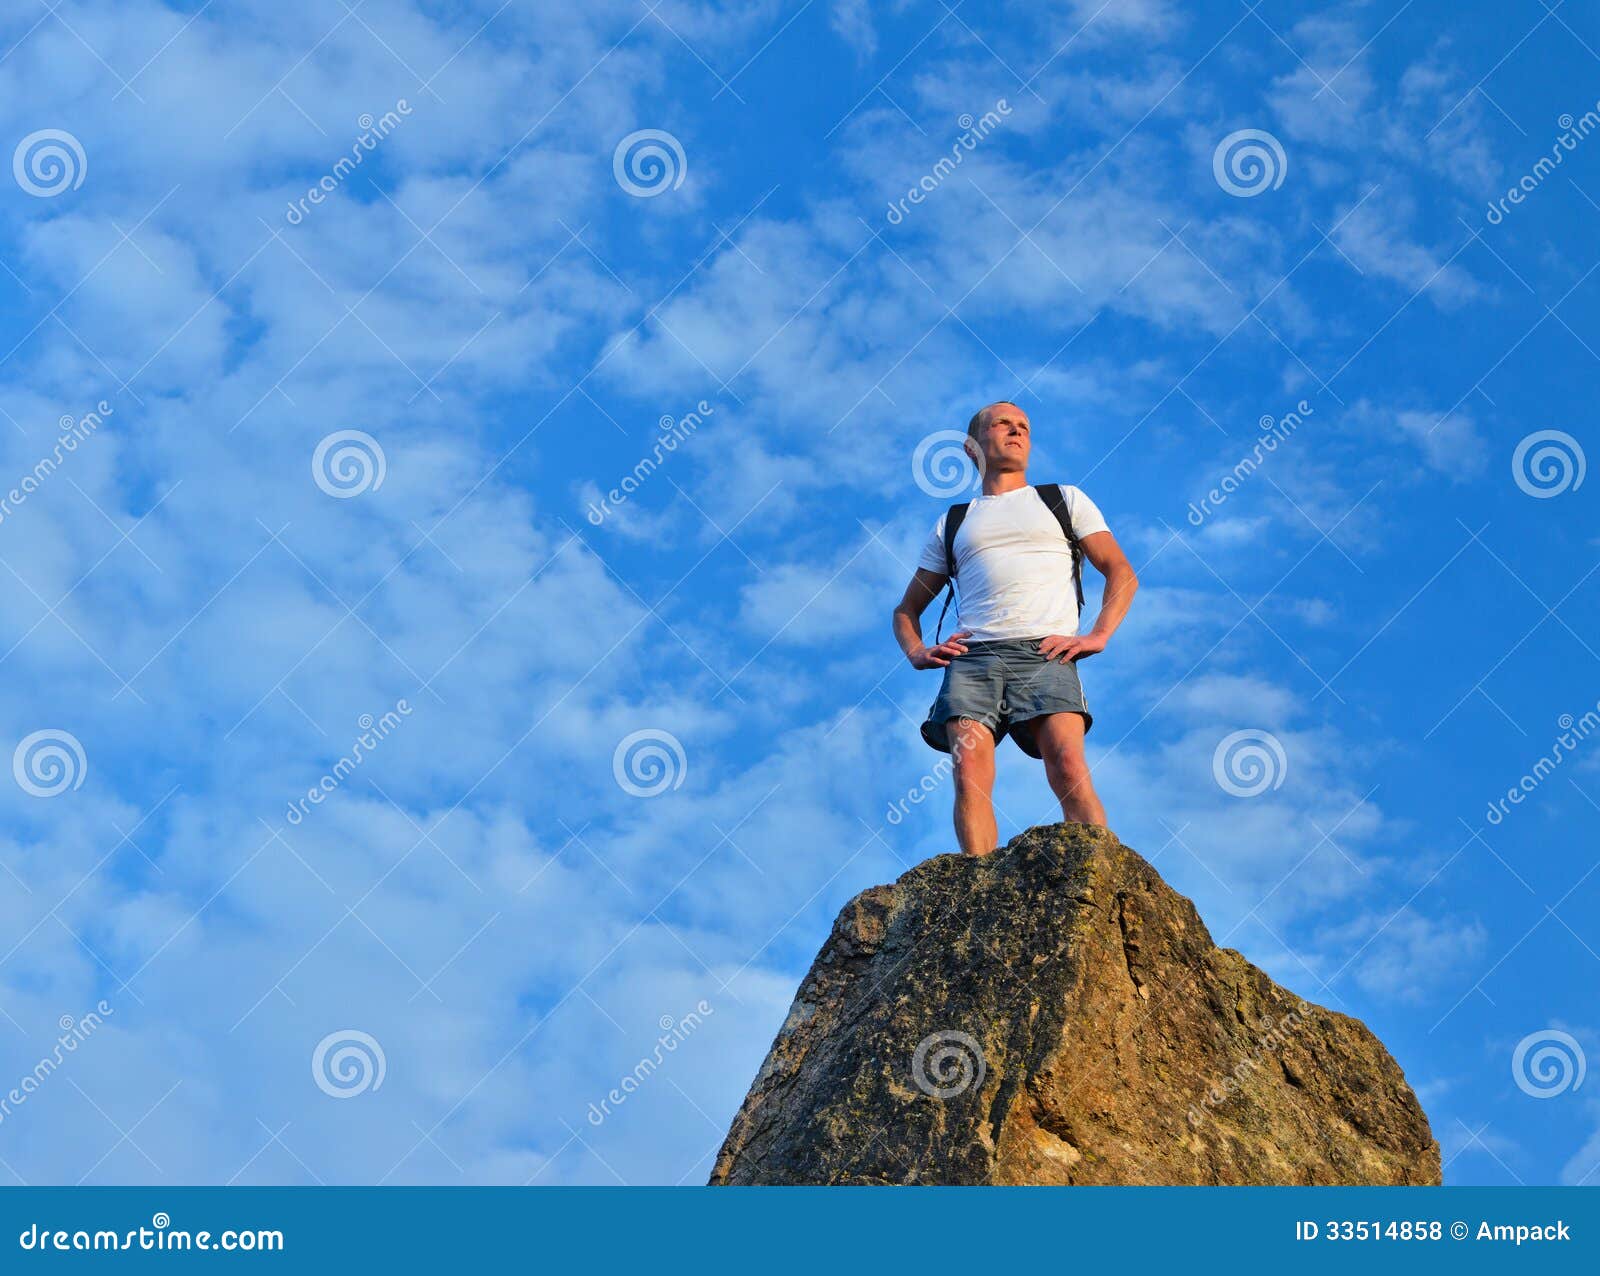 clipart man on mountaintop - photo #34